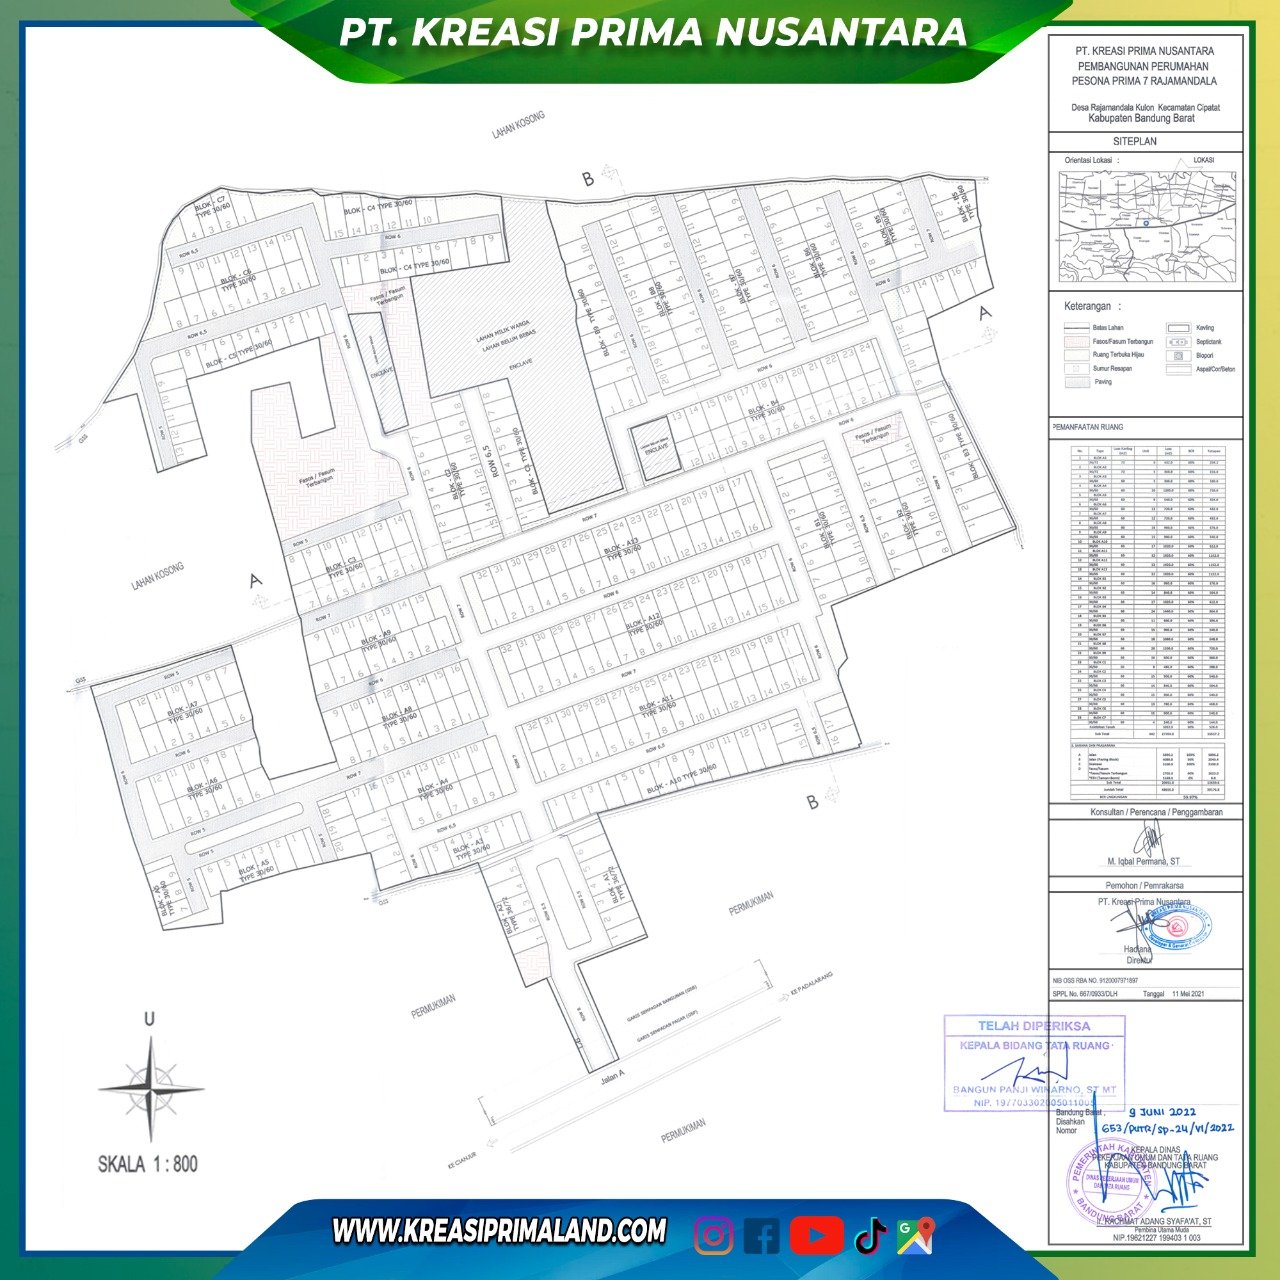 Site Plan Pesona Prima 7 Rajamandala